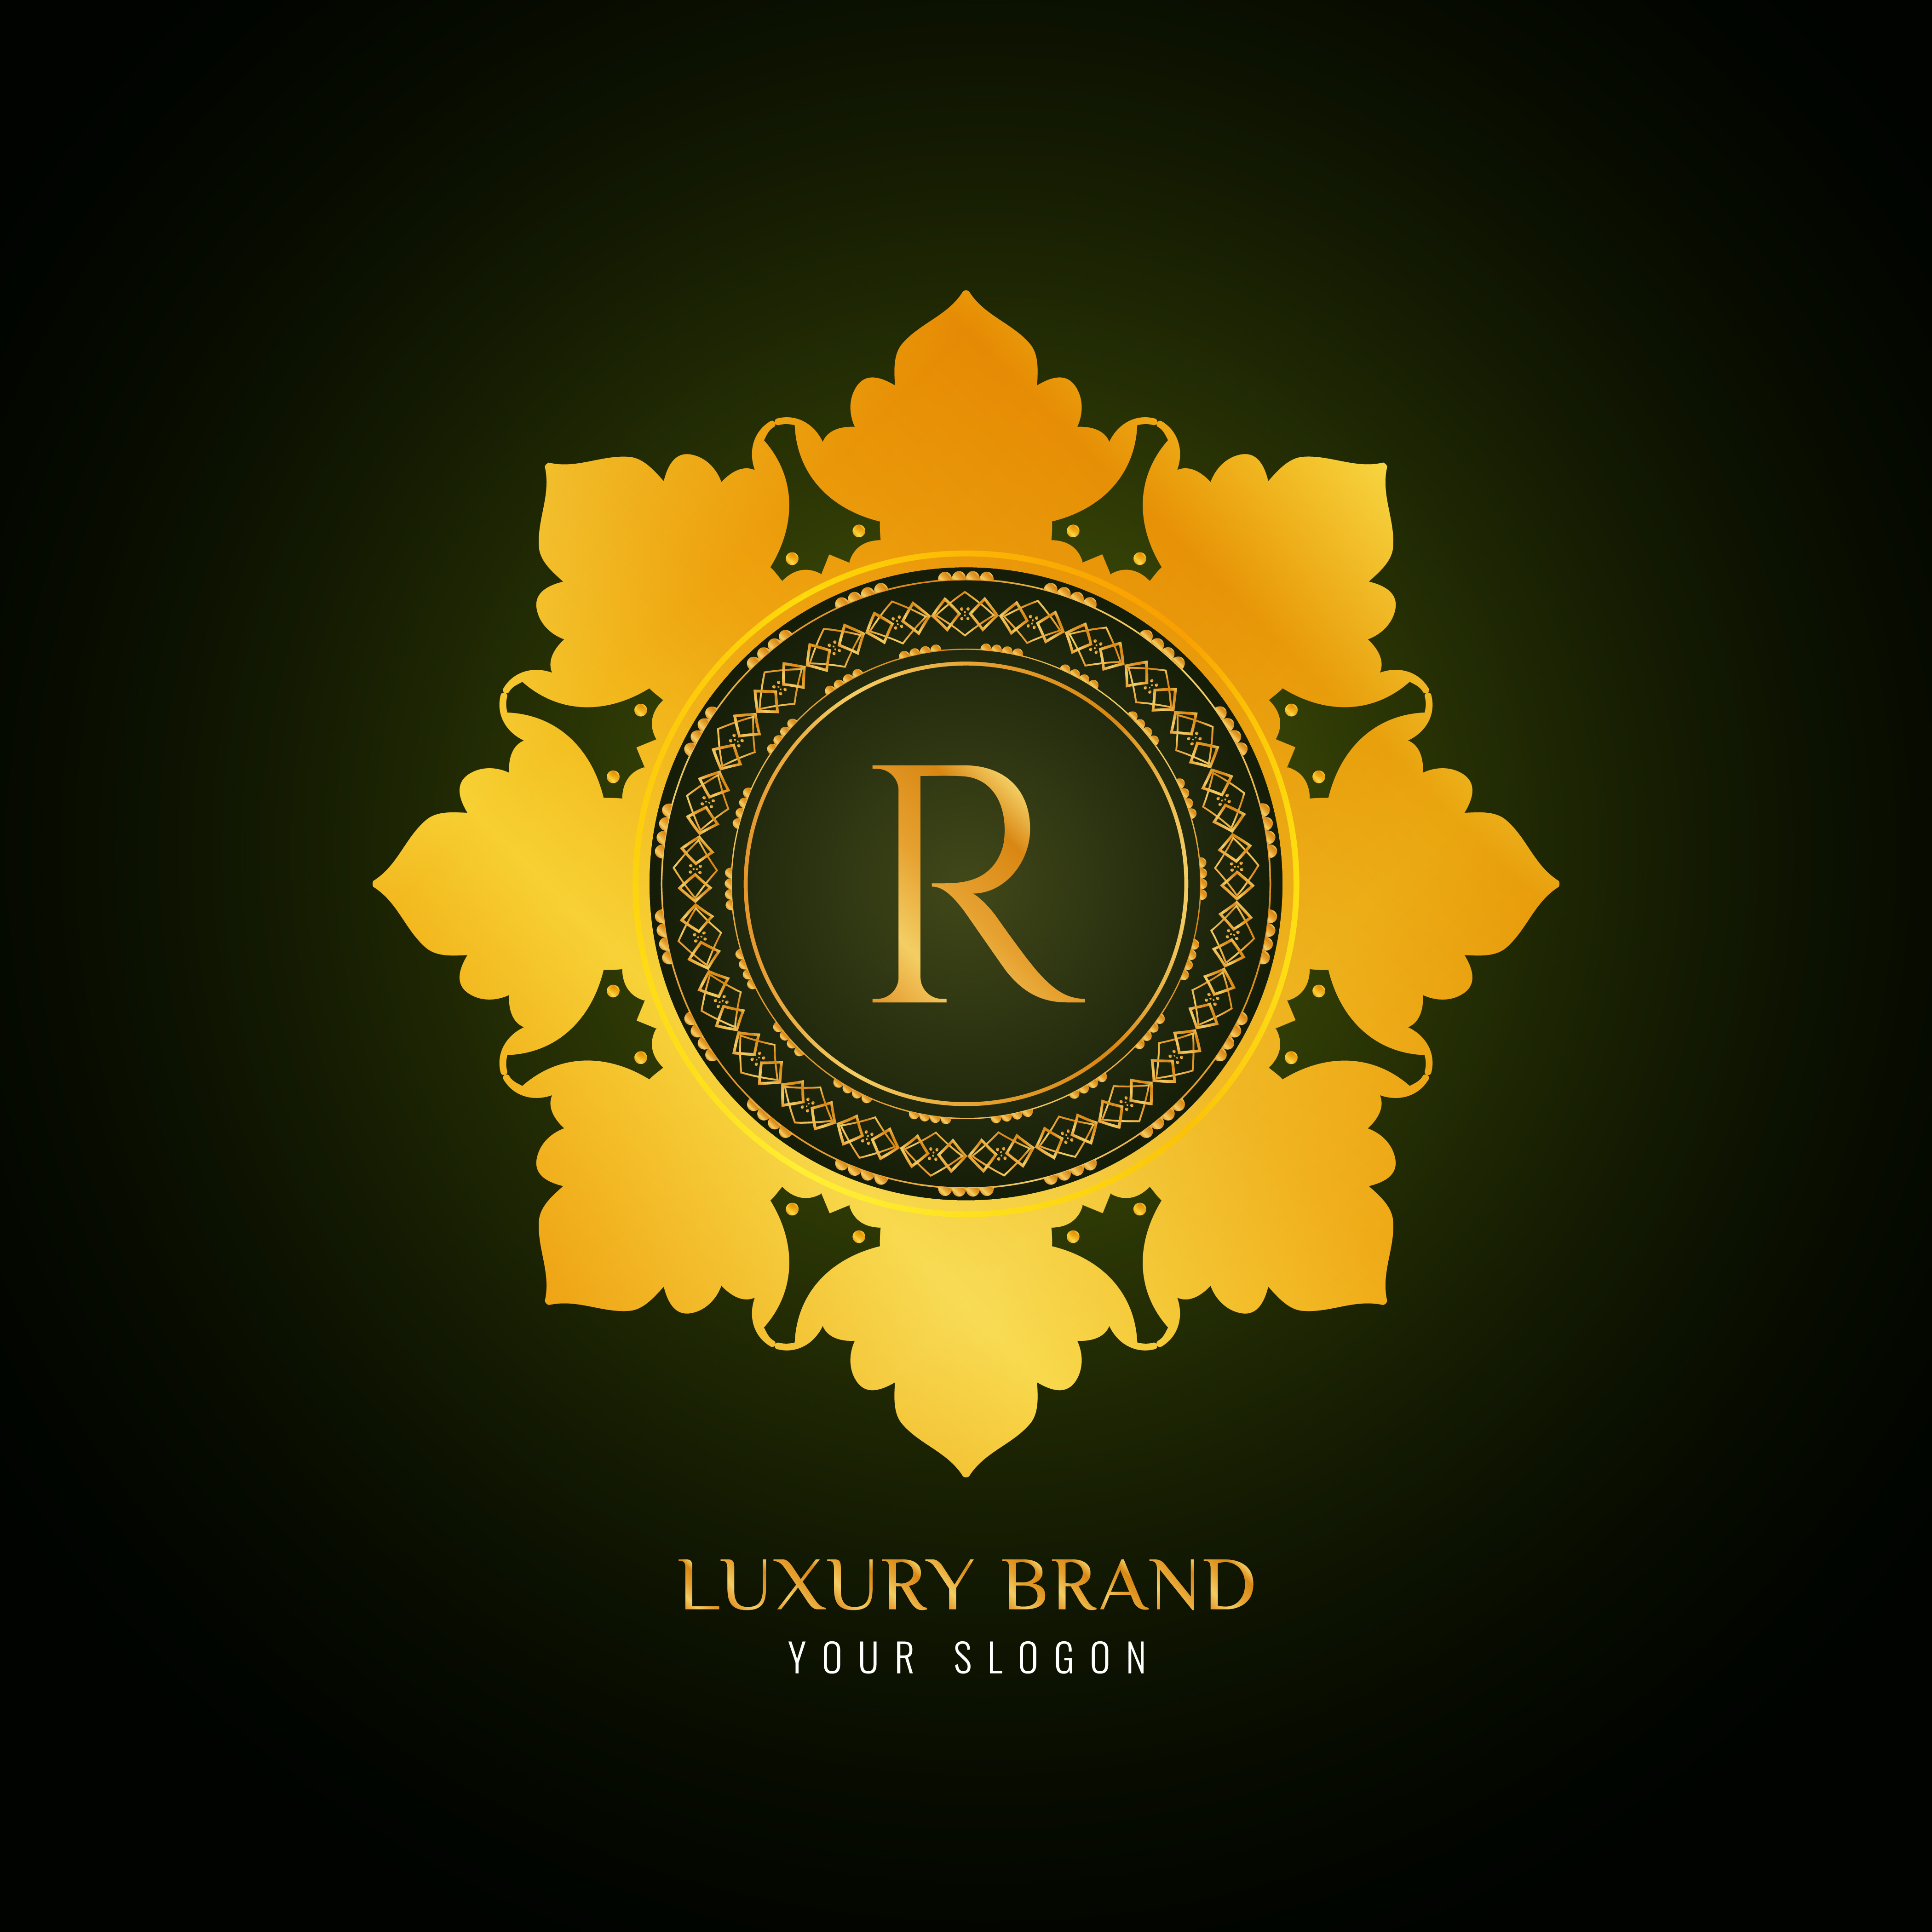 Download Modern luxury brand logo background - Download Free Vectors, Clipart Graphics & Vector Art